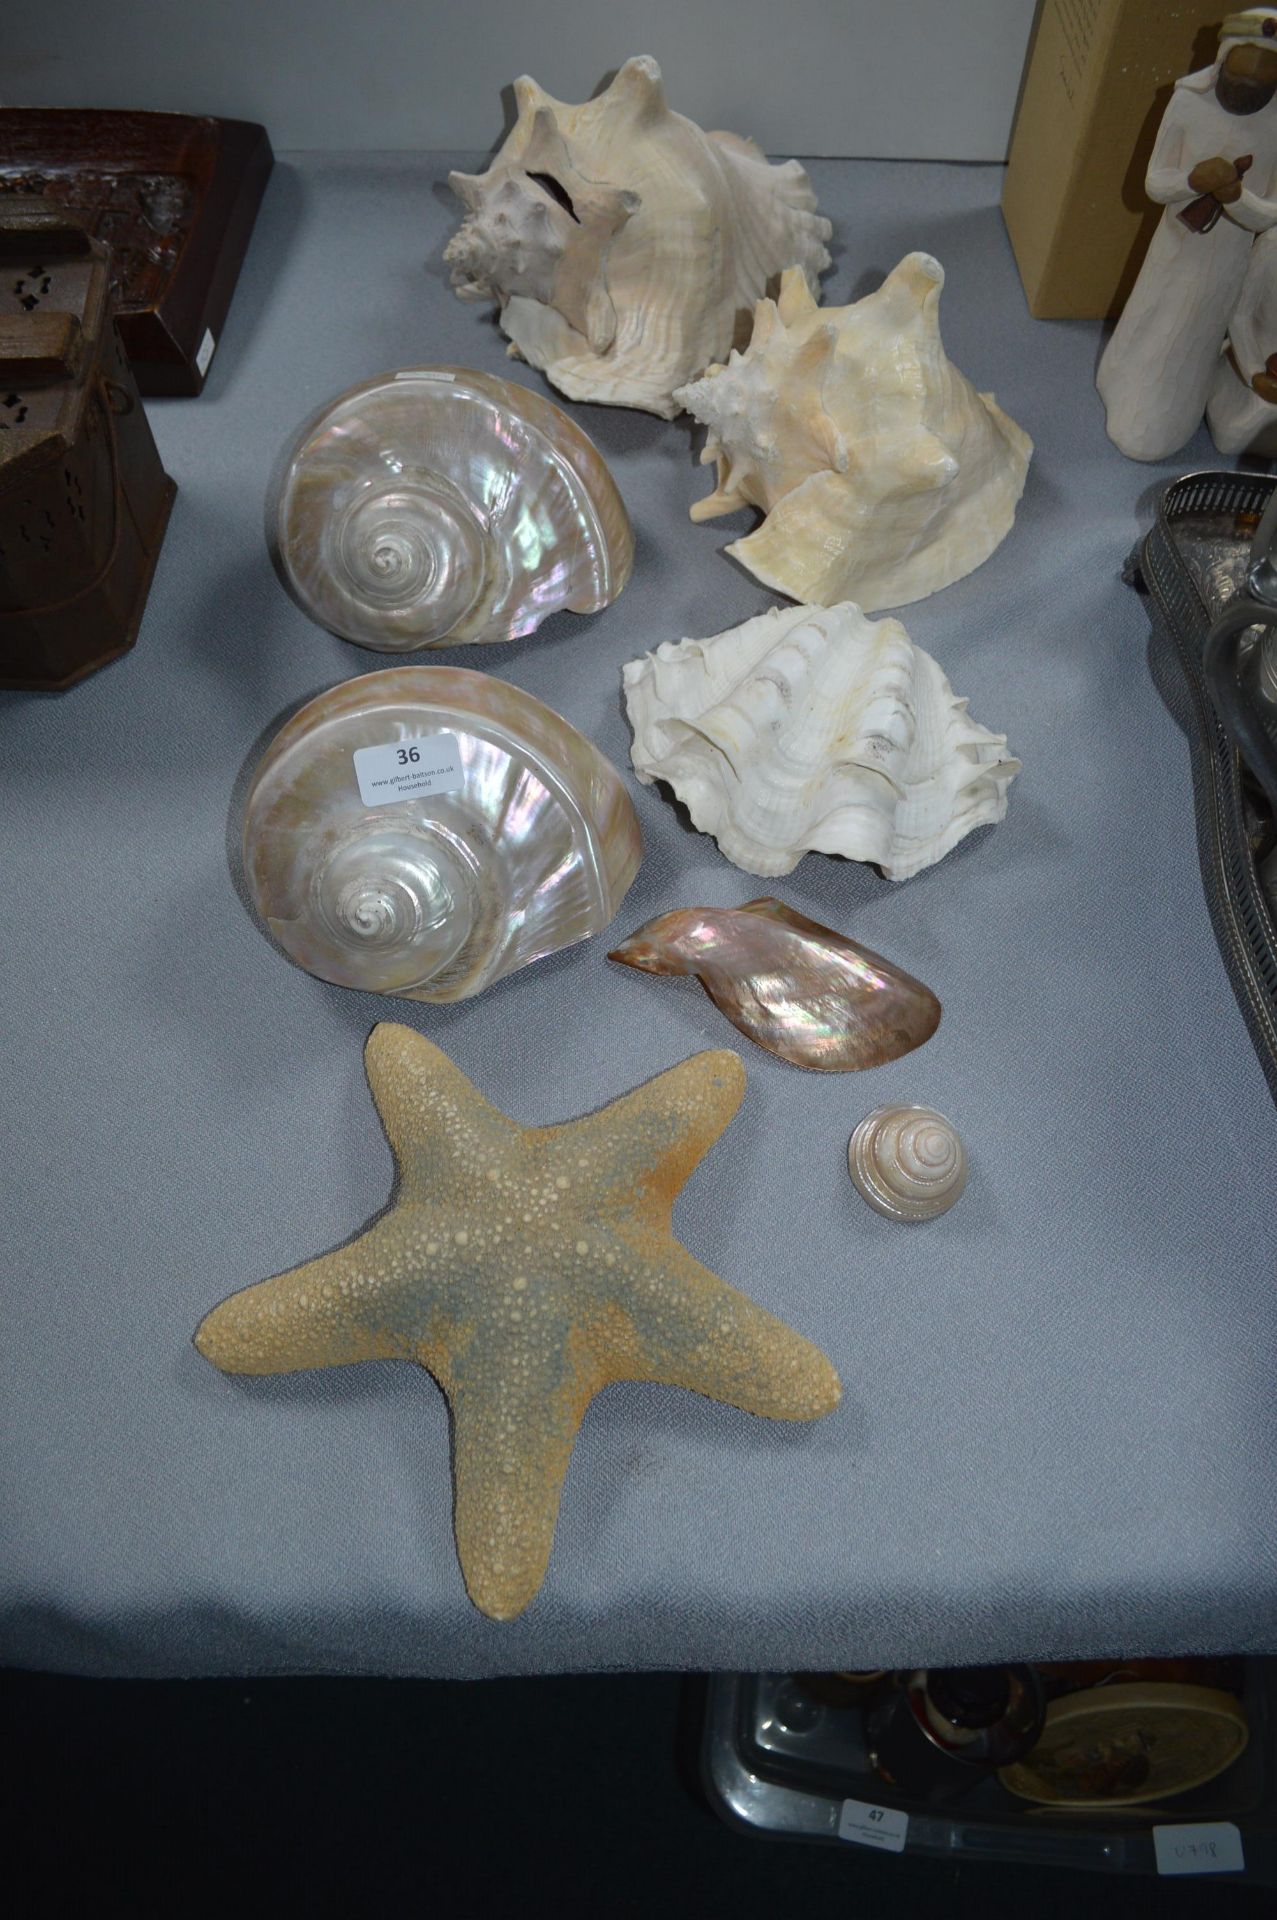 Shells and a Starfish